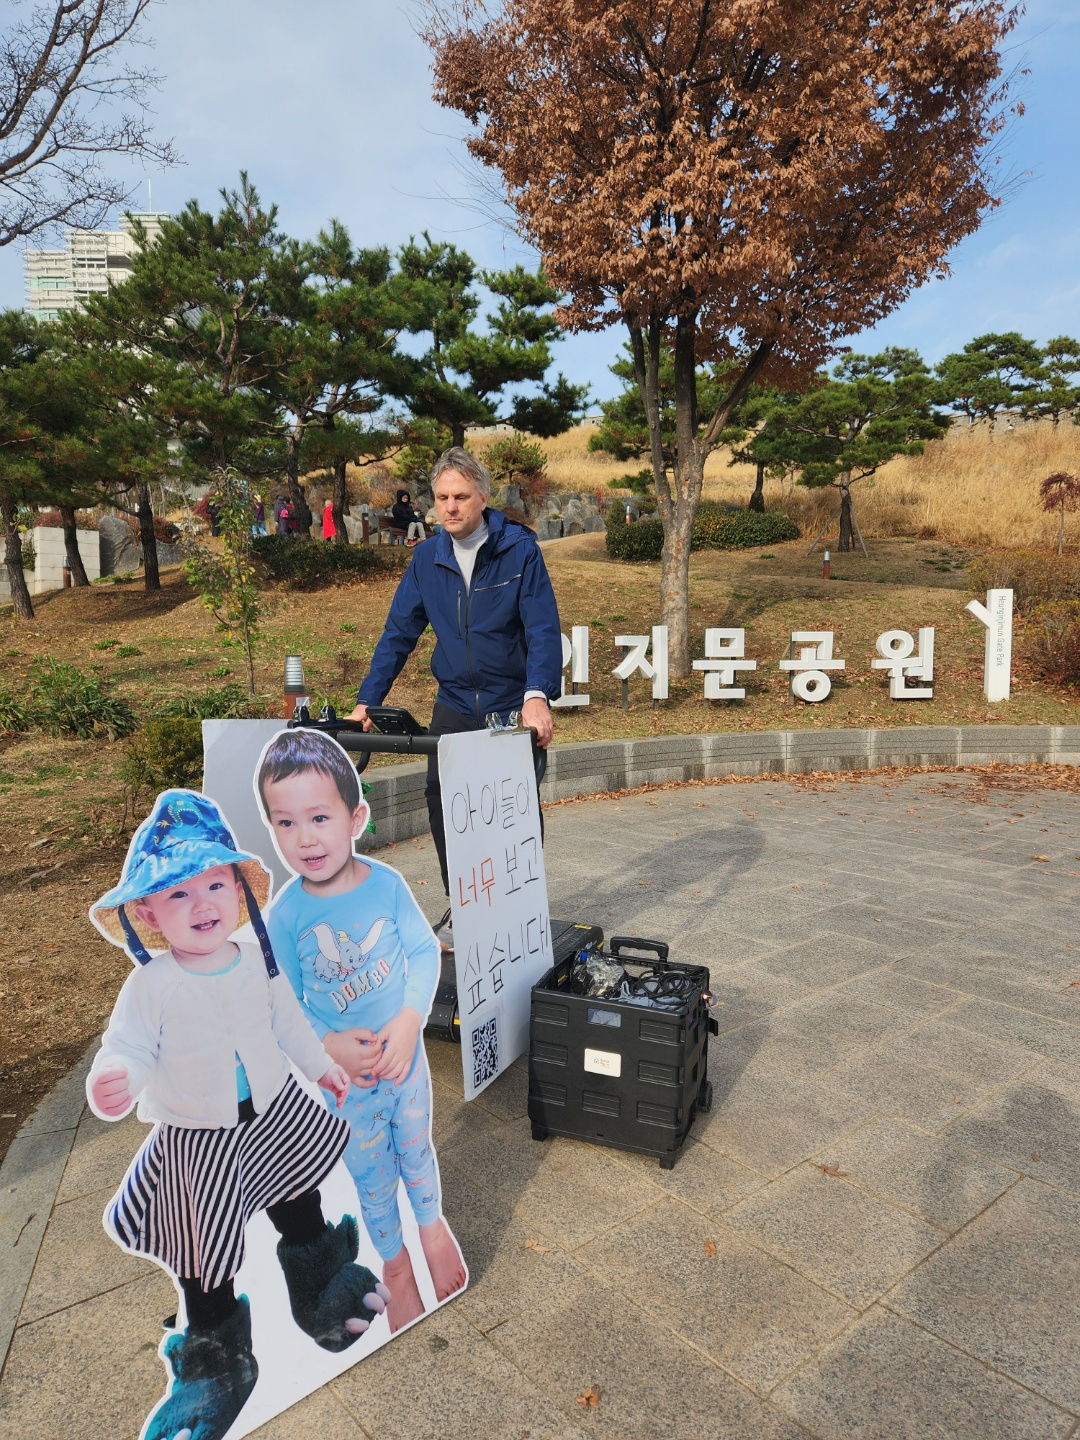 John Sichi, an American father whose two children were taken to Korea by their non-custodian Korean mother in 2019, walks on a portable treadmill on a street in Seoul, Nov. 29. (Choi Jae-hee / The Korea Herald)